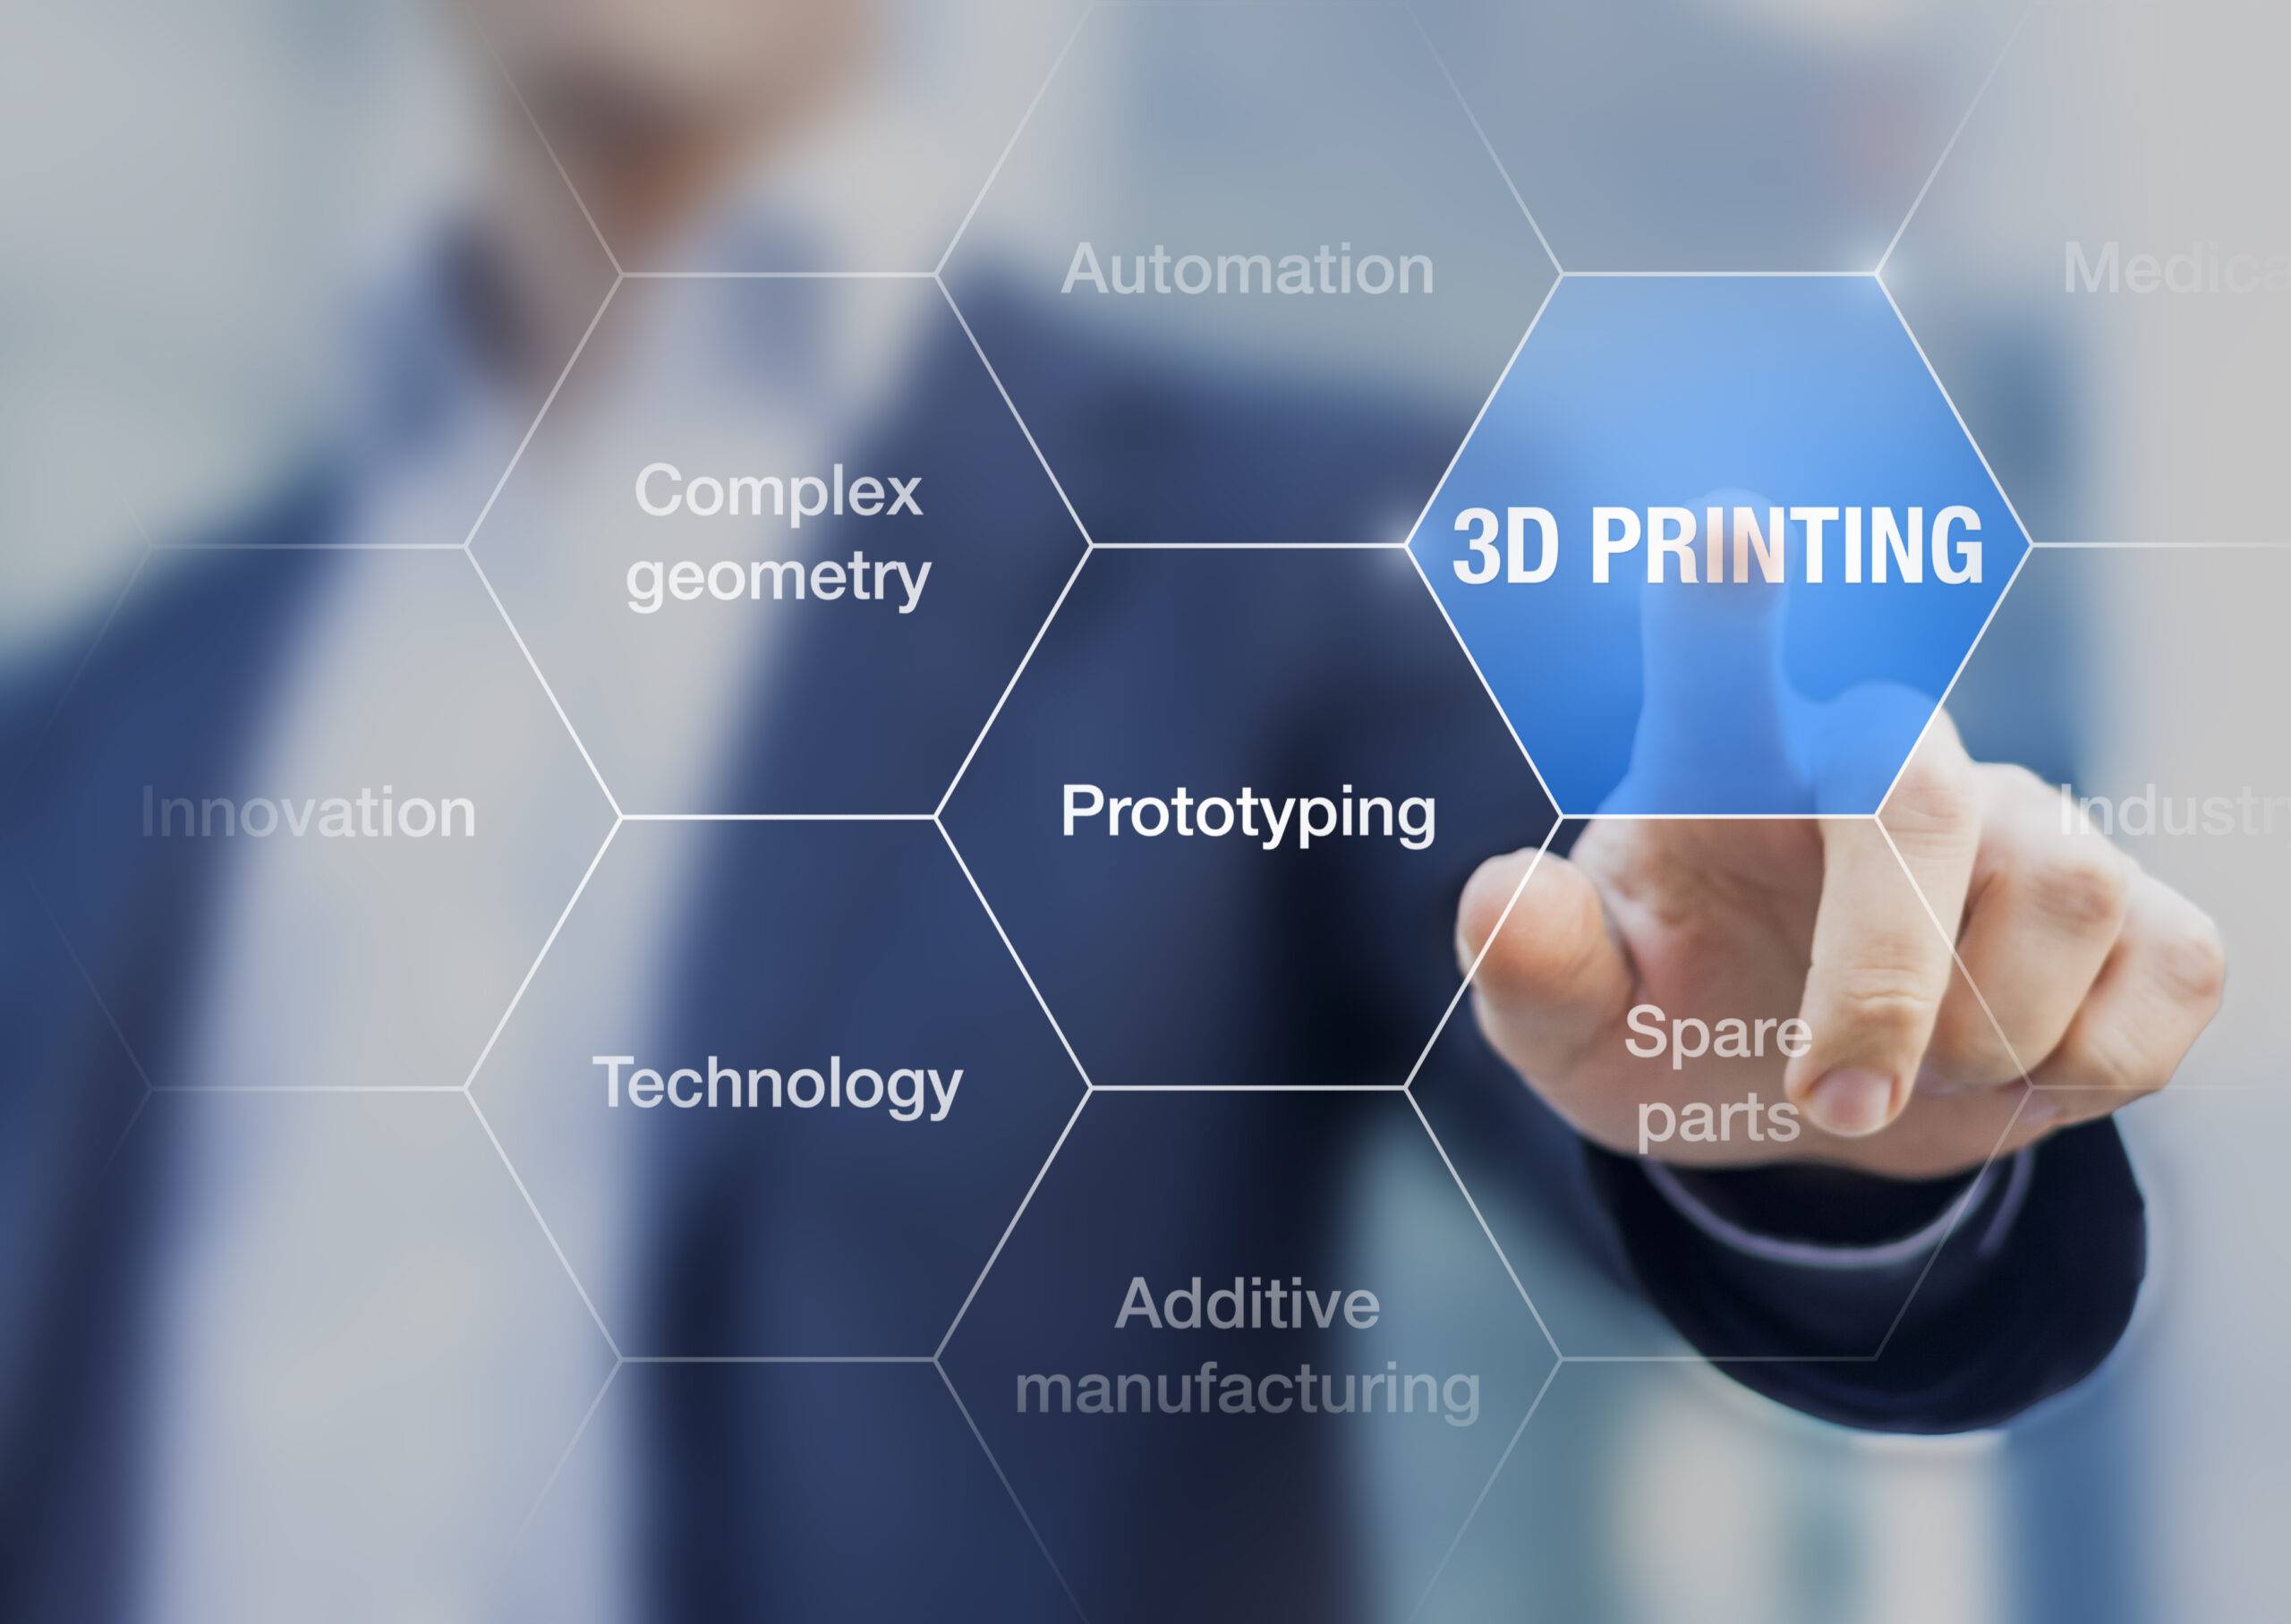 Focus on 3D Printing